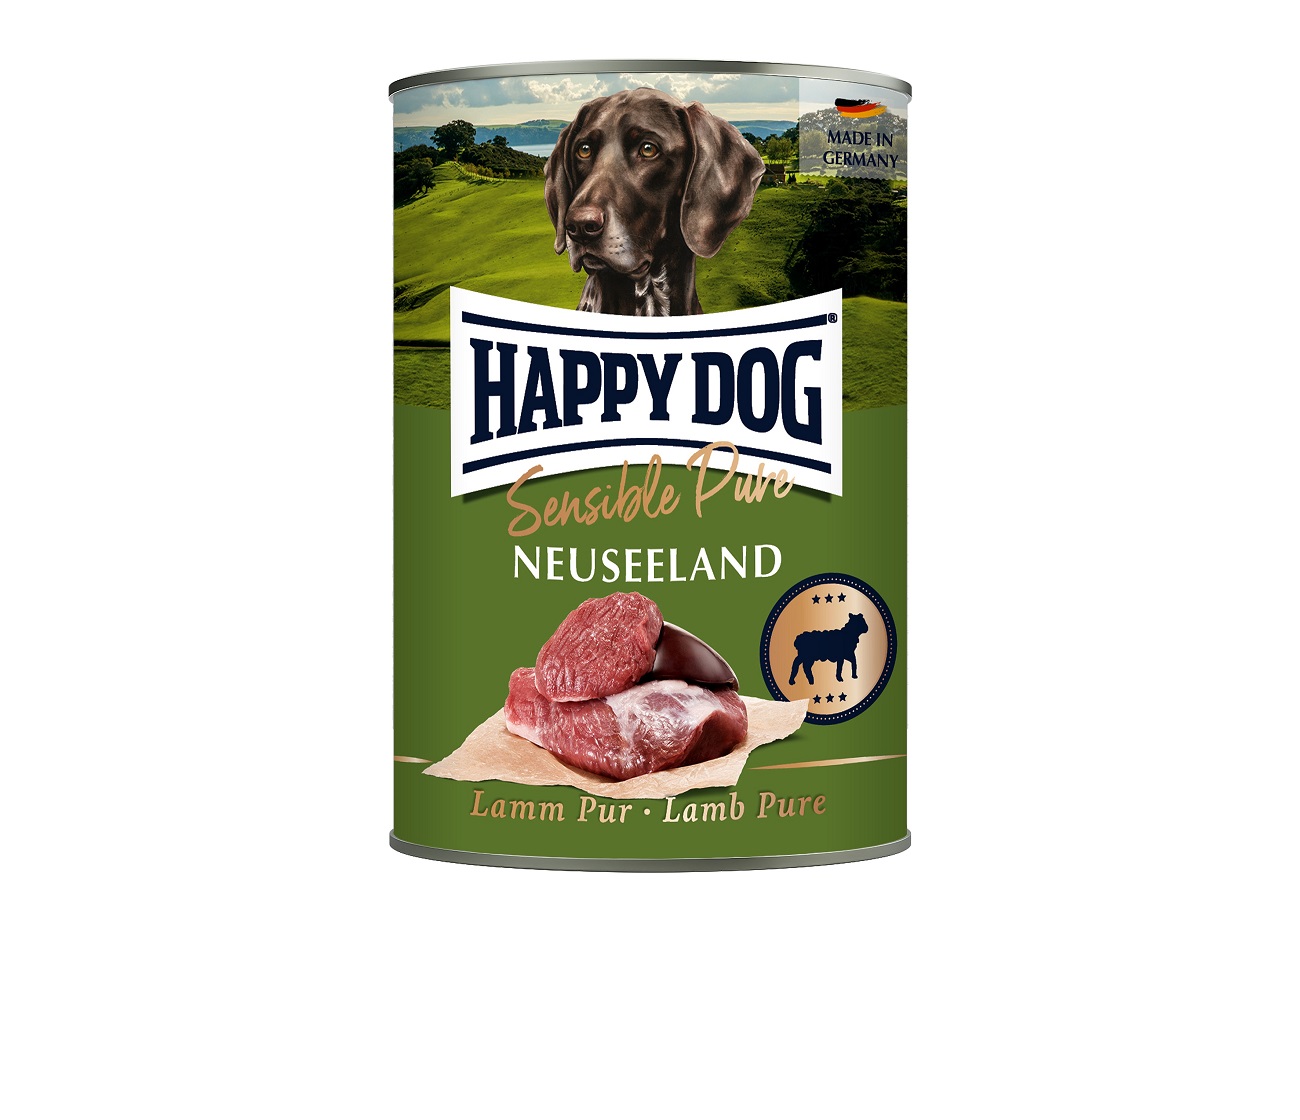 Happy Dog Sensible Pure Neuseeland -...